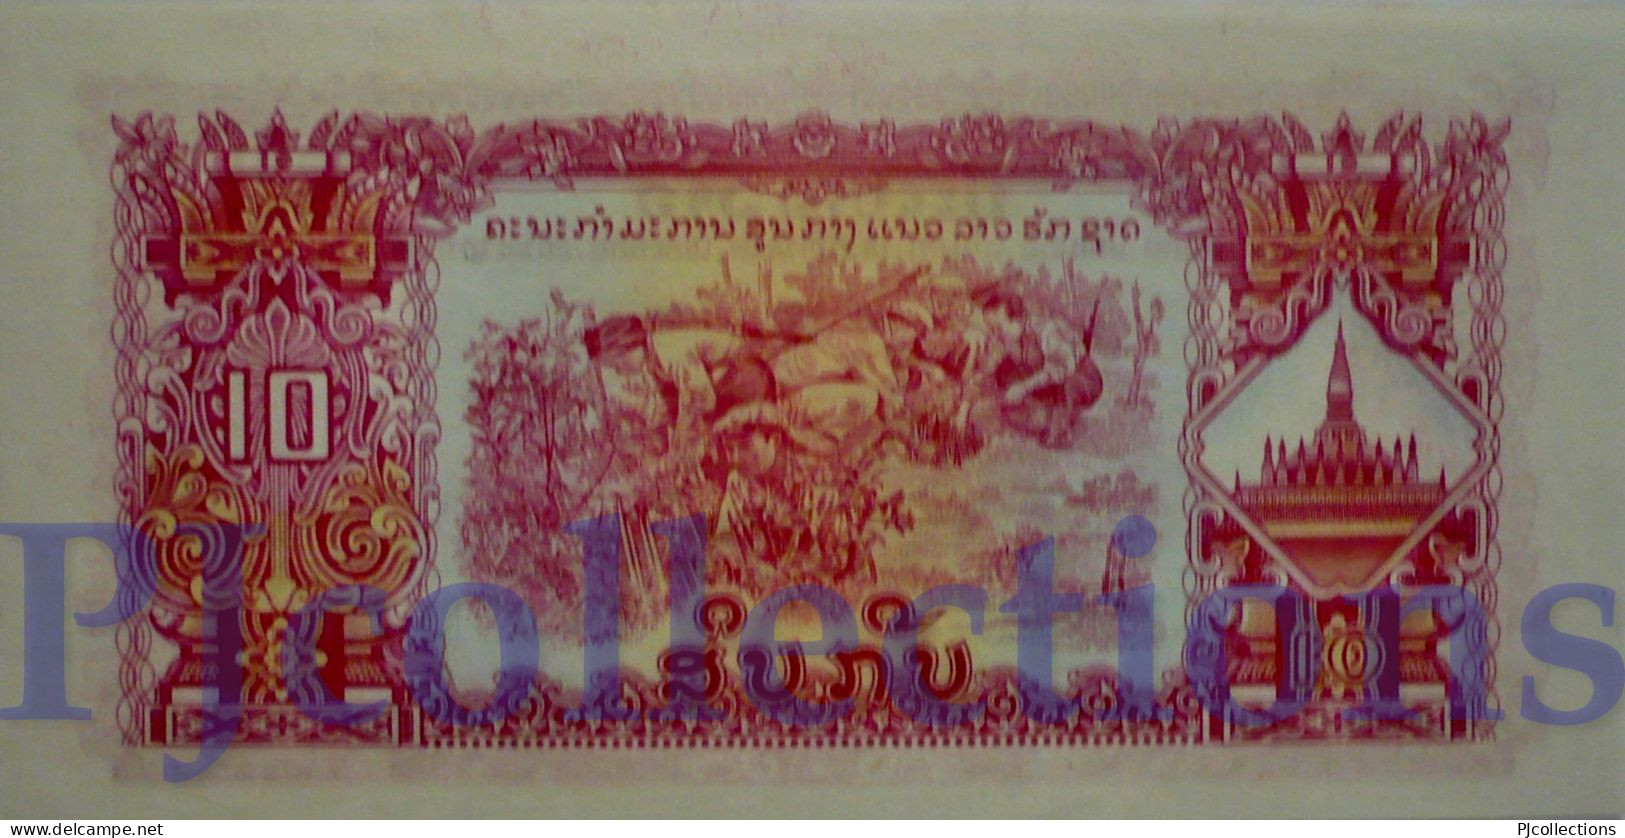 LAOS 1 KIP 1975 PICK 20b UNC - Laos